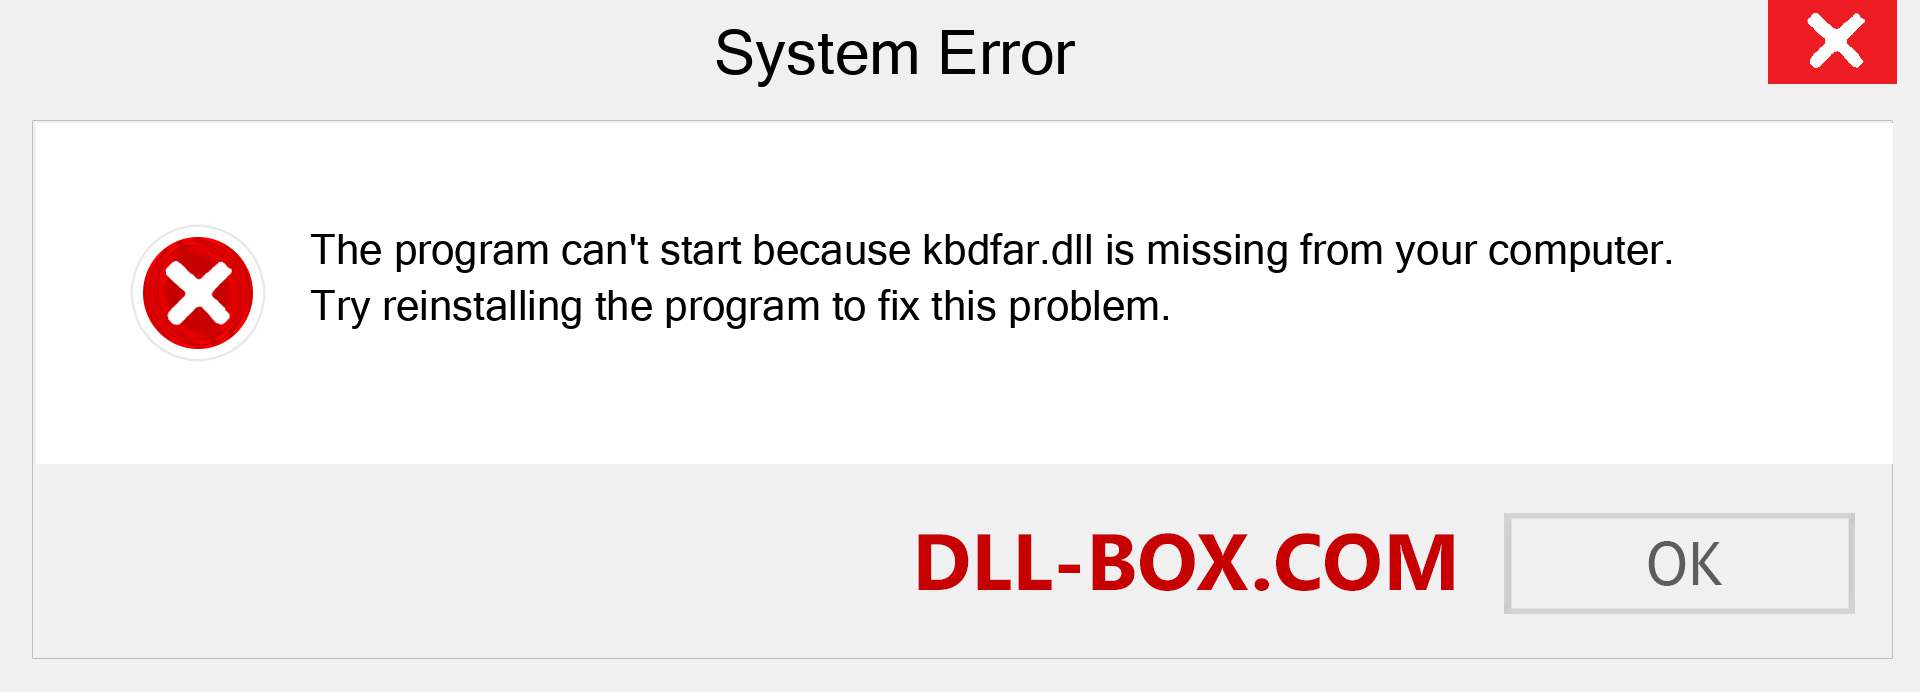  kbdfar.dll file is missing?. Download for Windows 7, 8, 10 - Fix  kbdfar dll Missing Error on Windows, photos, images